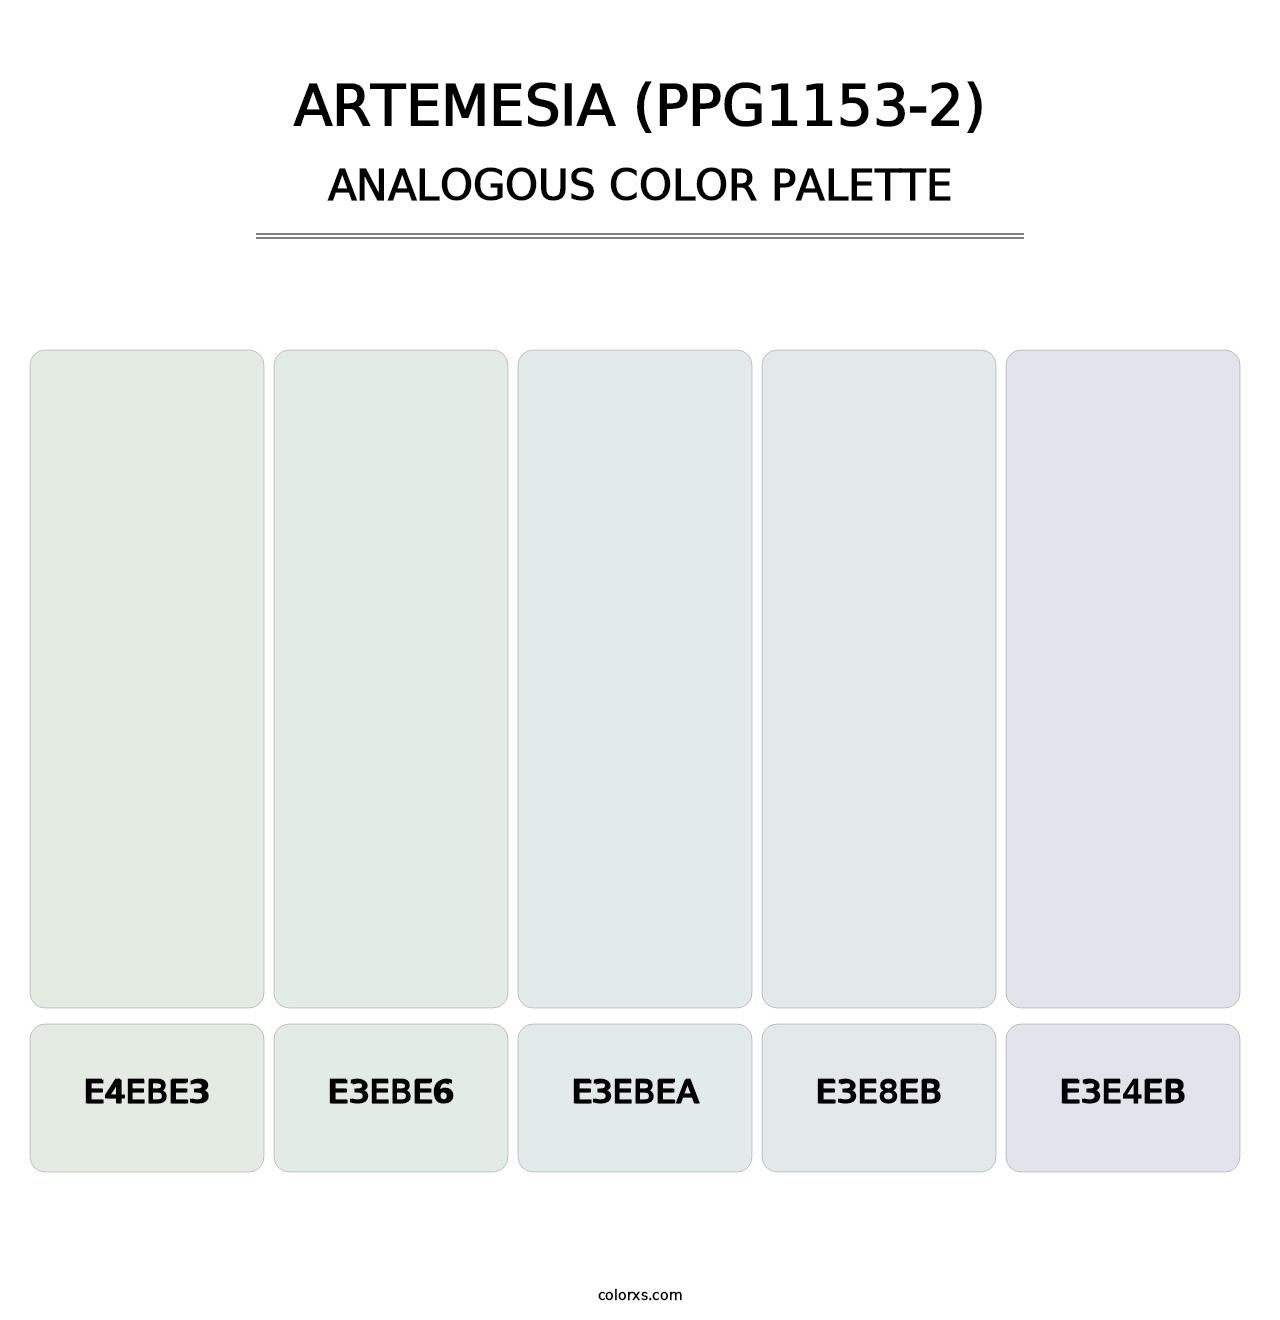 Artemesia (PPG1153-2) - Analogous Color Palette